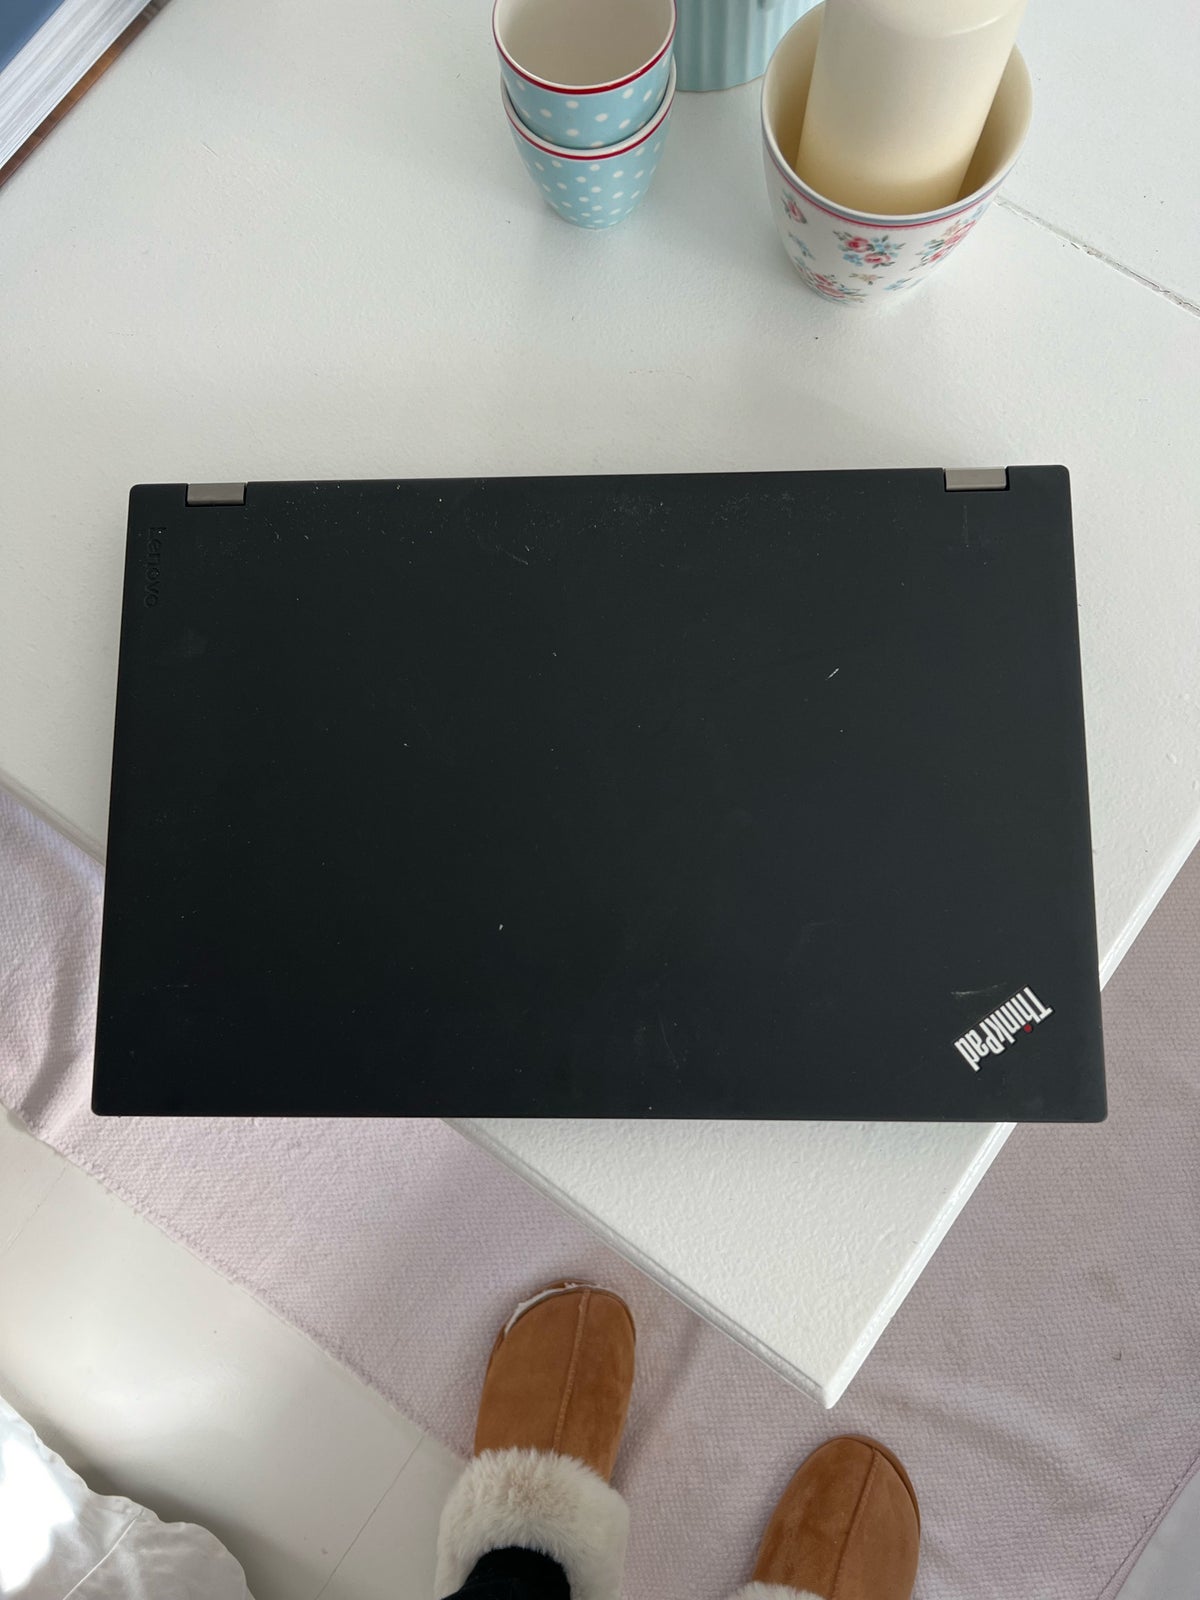 Lenovo Thinkpad P51 ( Defekt) , Intel Core i7-7820 3.9 GHz, 0